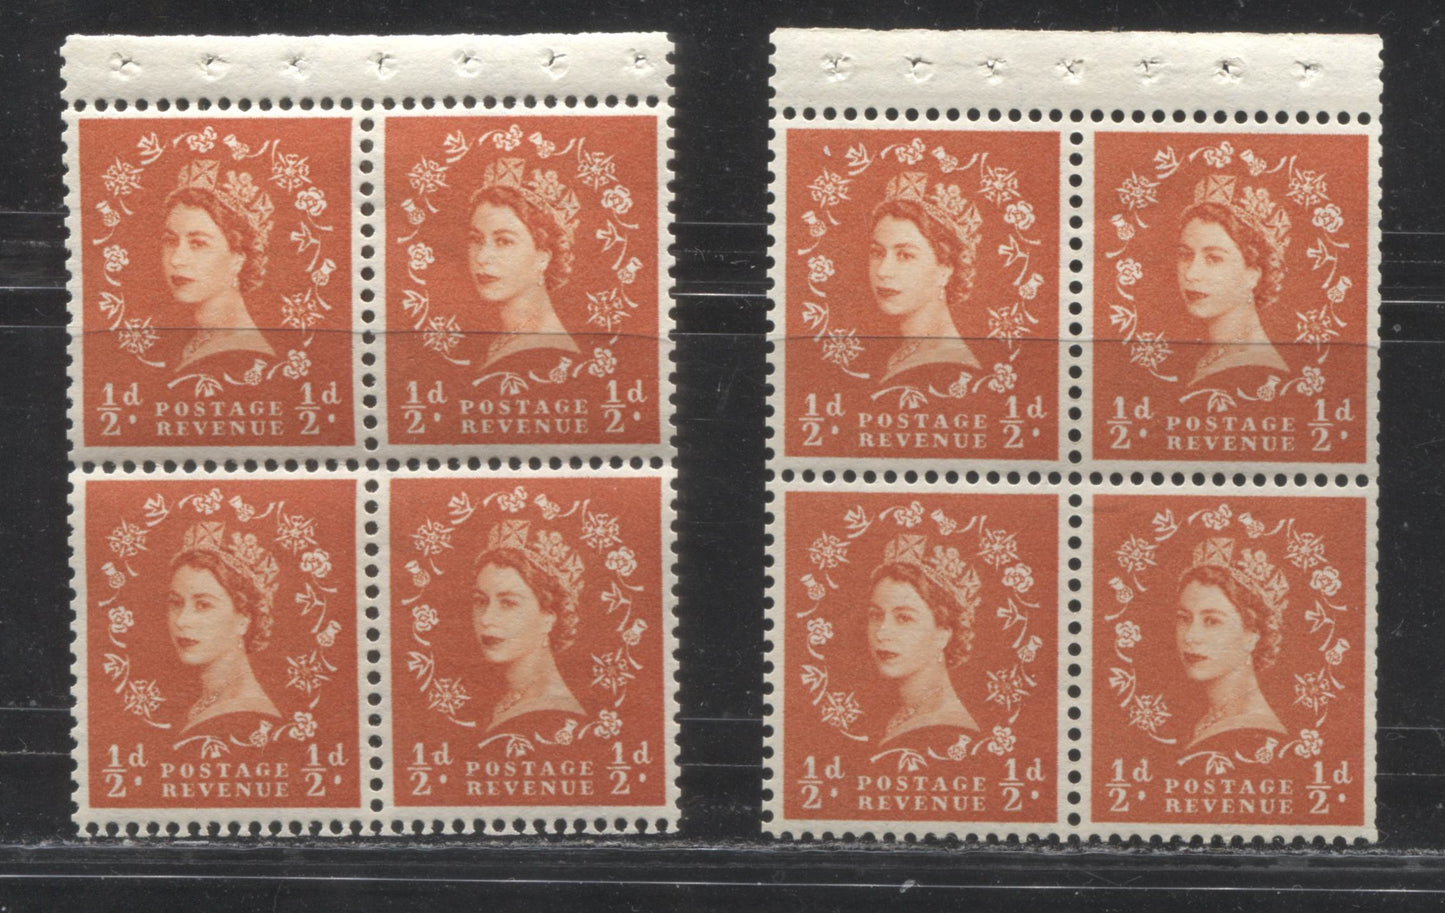 Great Britain SC#353b SG#570l 1/2d Orange Queen Elizabeth II, 1958-1967 Wilding Issue, Multiple Crown Watermark, Booklet Panes of 4, Cream Paper, LF-fl Under UV, Slightly Different Shades, VFNH